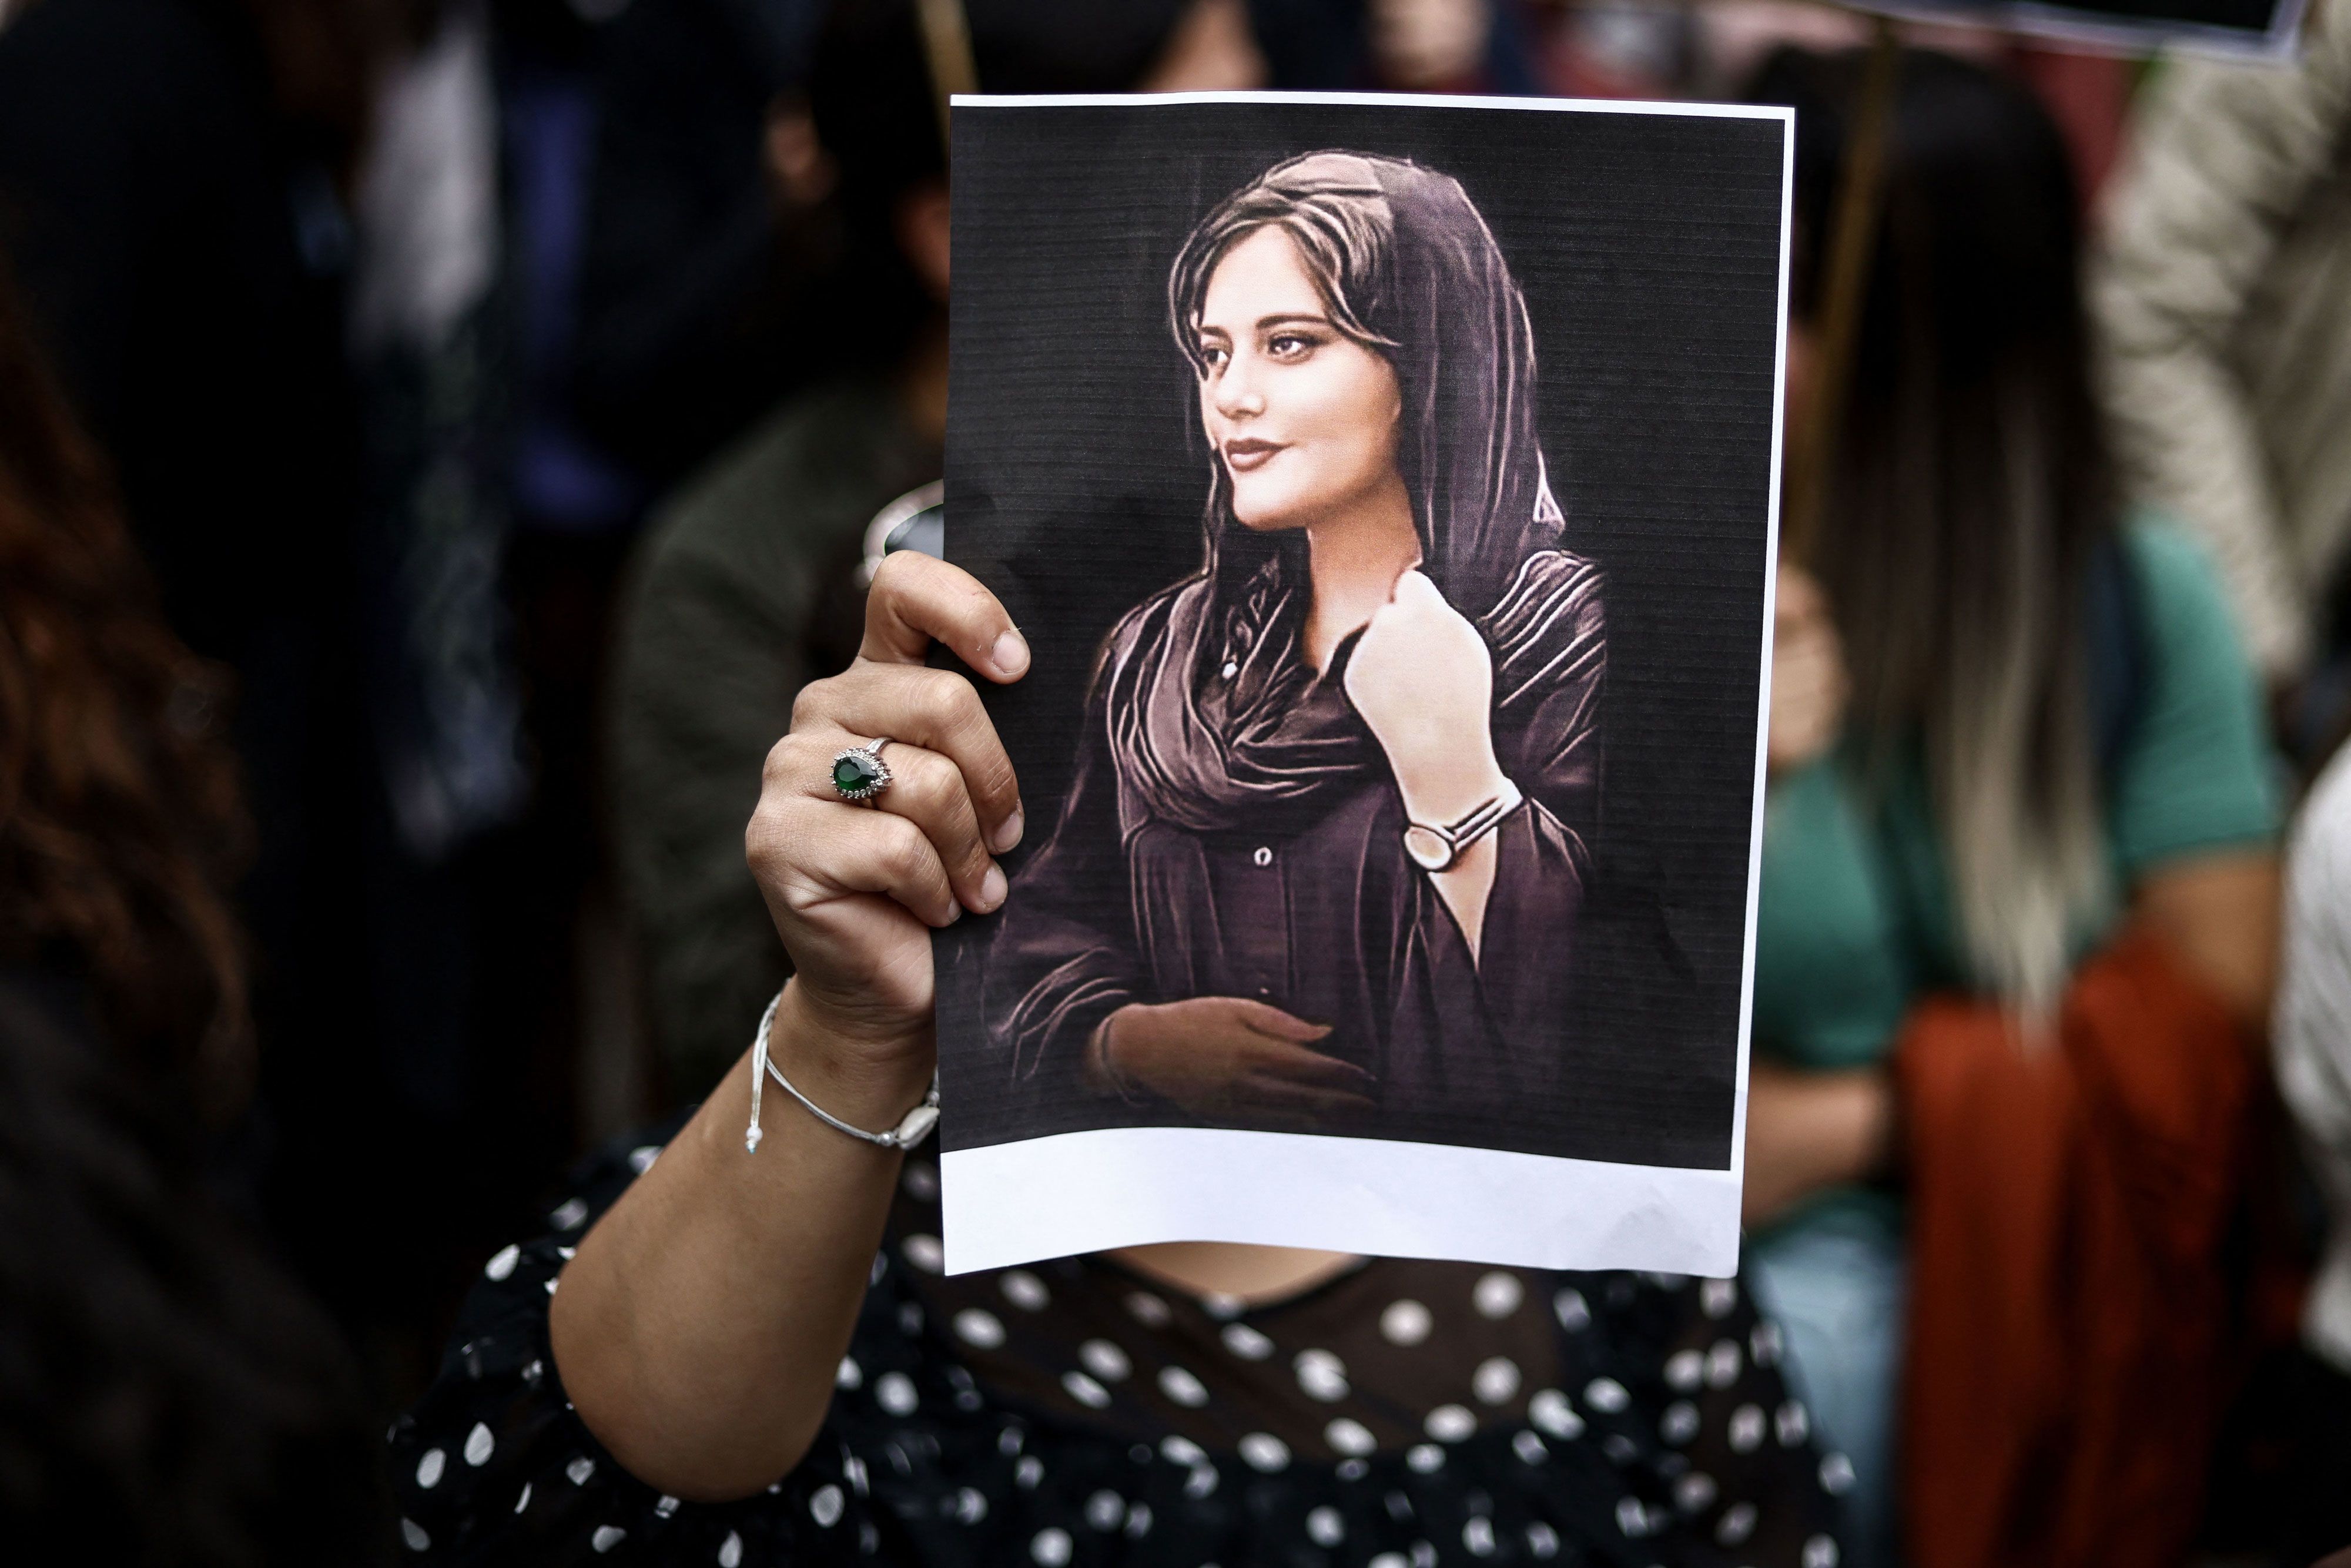 At least 108 killed in Iranian protest over Mahsa Amini death : Report